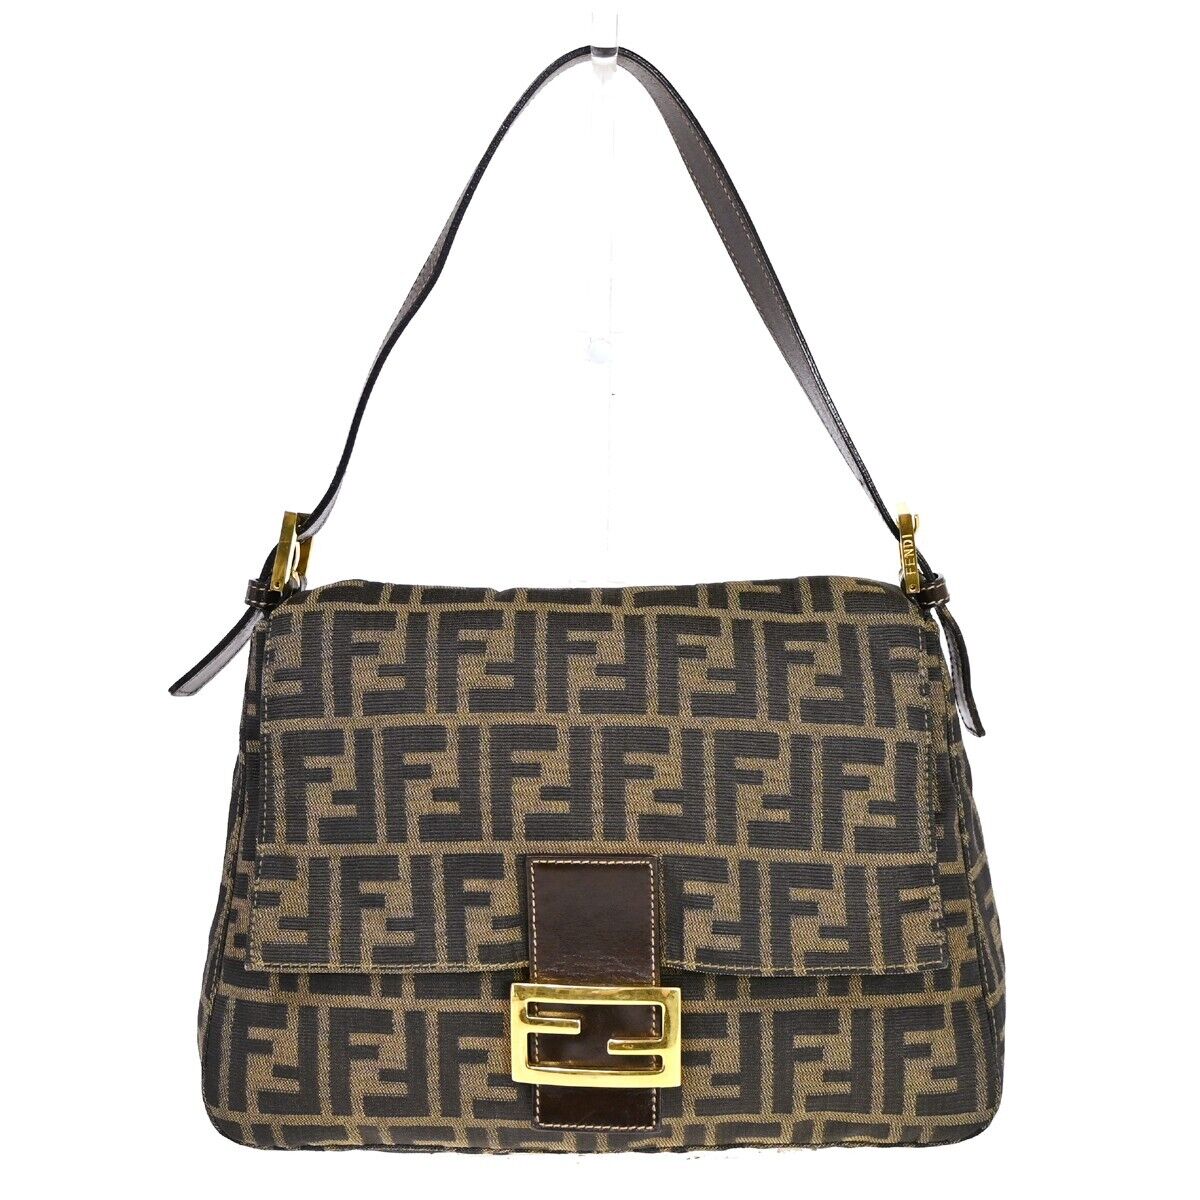 Luxury Designer Bag Investment Series: Fendi Peek-a-boo Bag Review -  History, Prices 2020 • Save. Spend. Splurge.